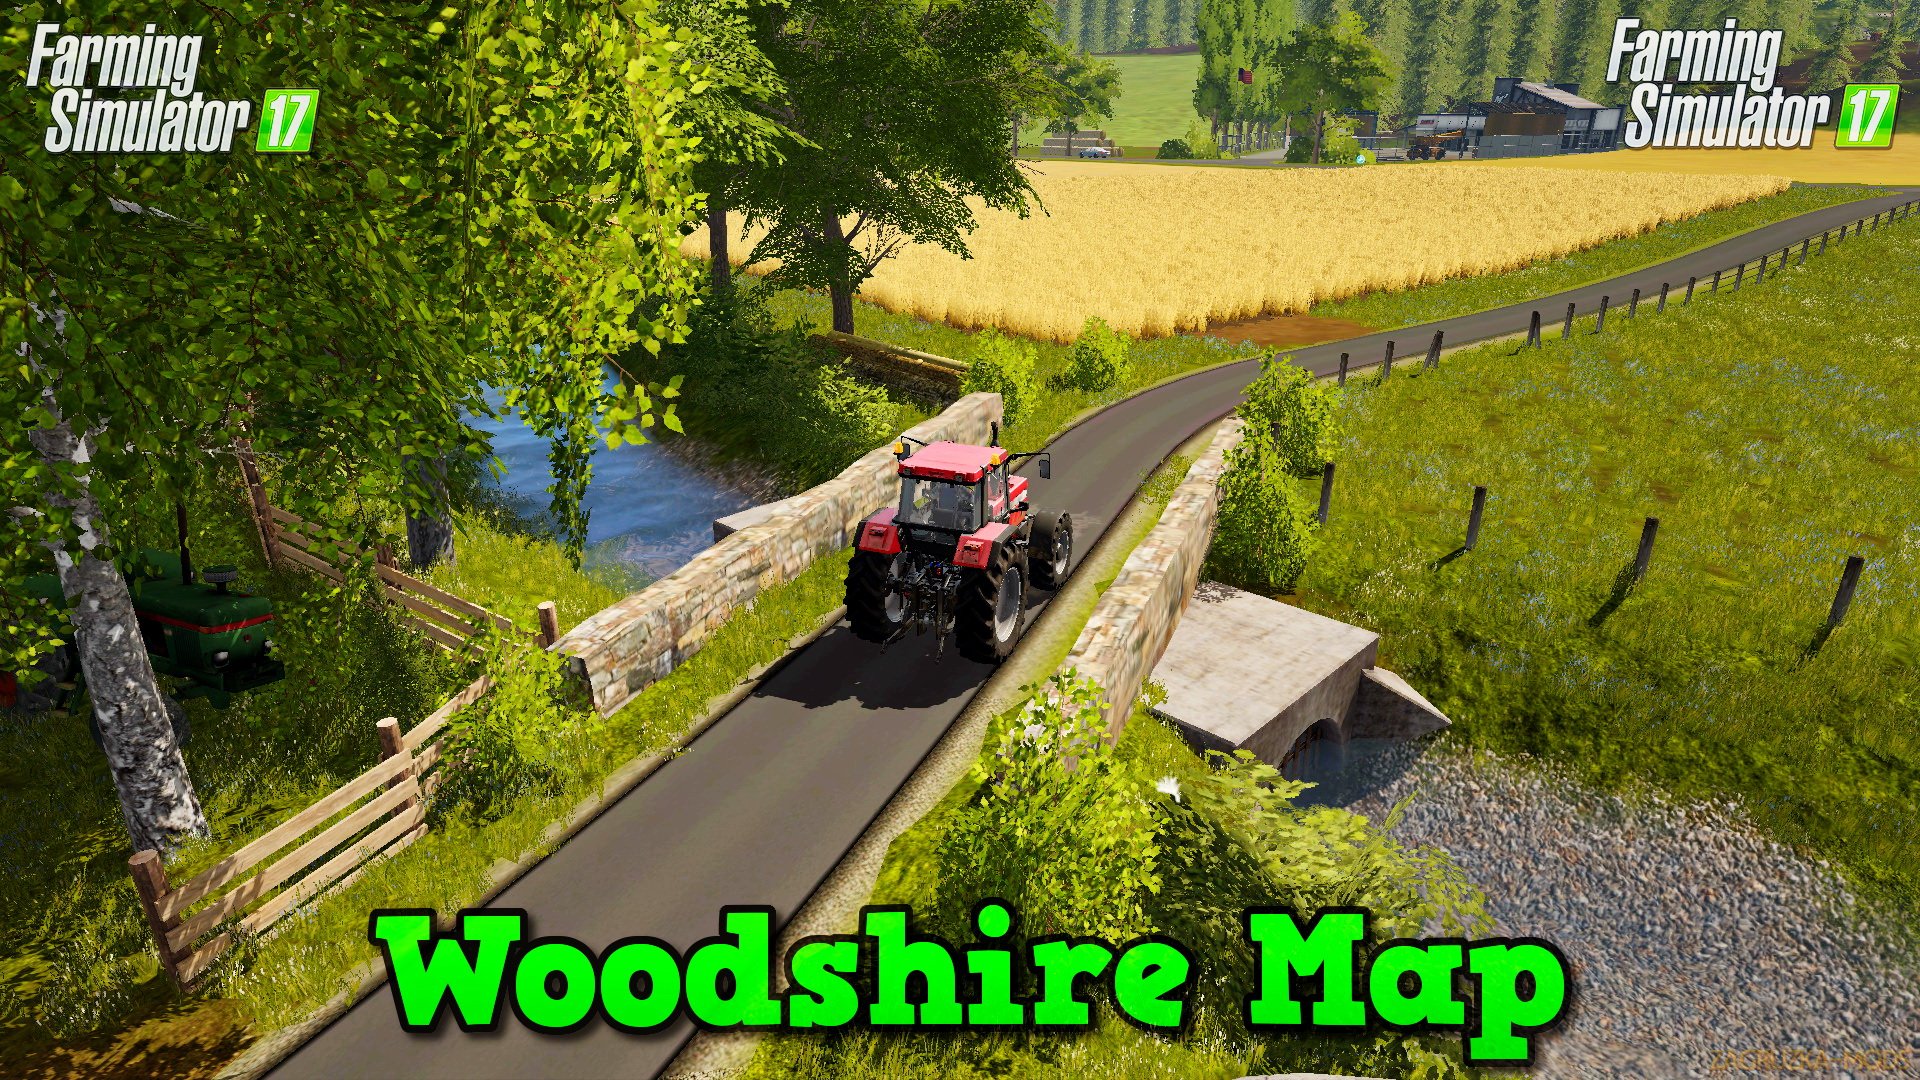 Woodshire Map v2.2 for FS 17